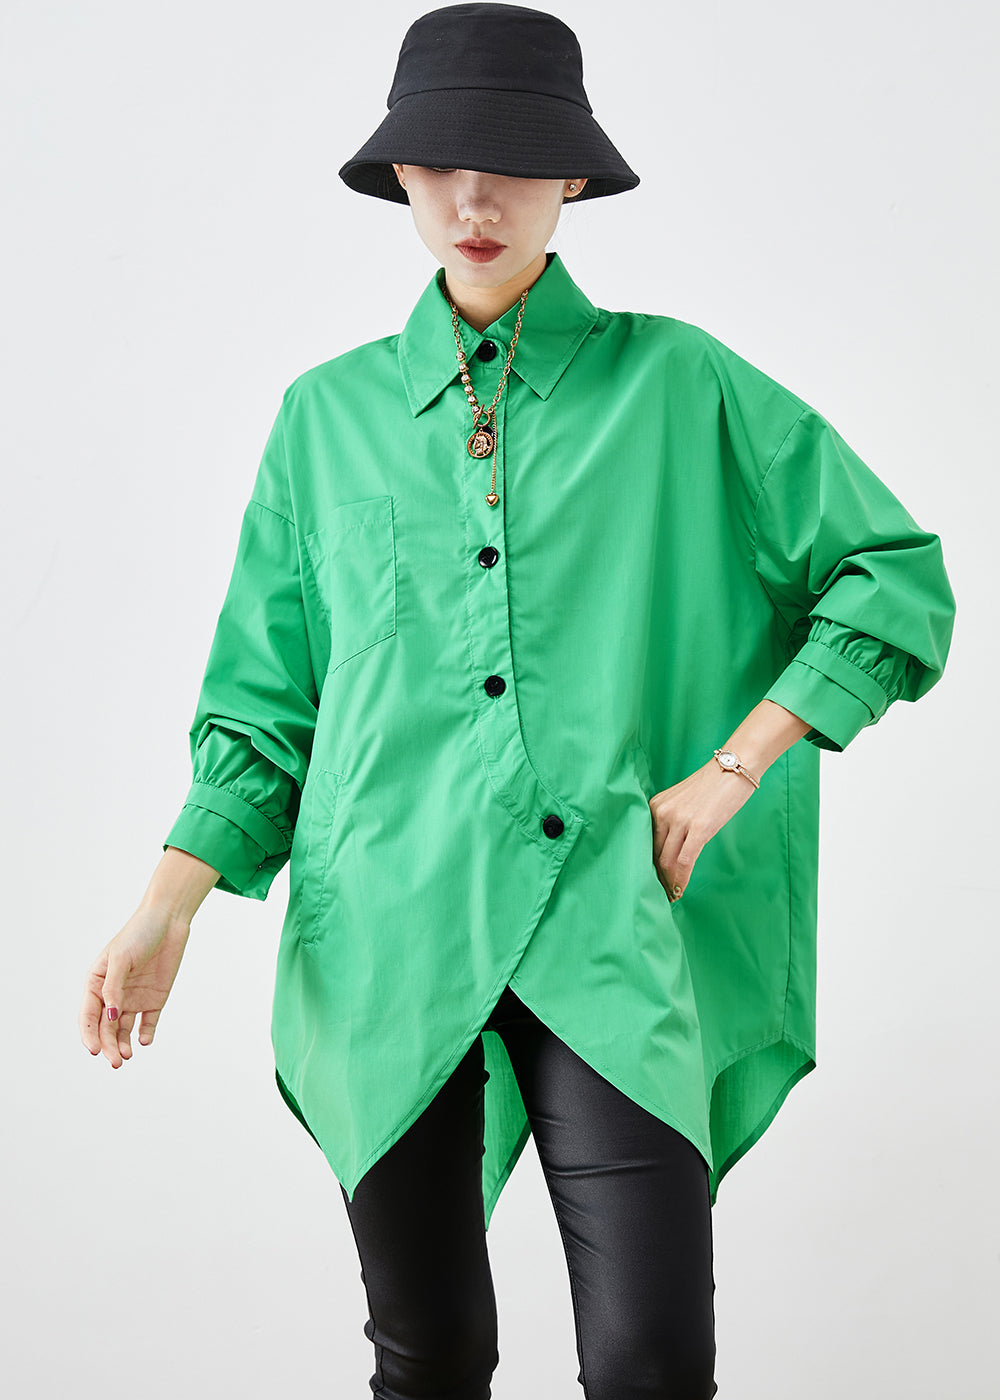 Boho Green Asymmetrical Button Down Cotton Shirt Fall